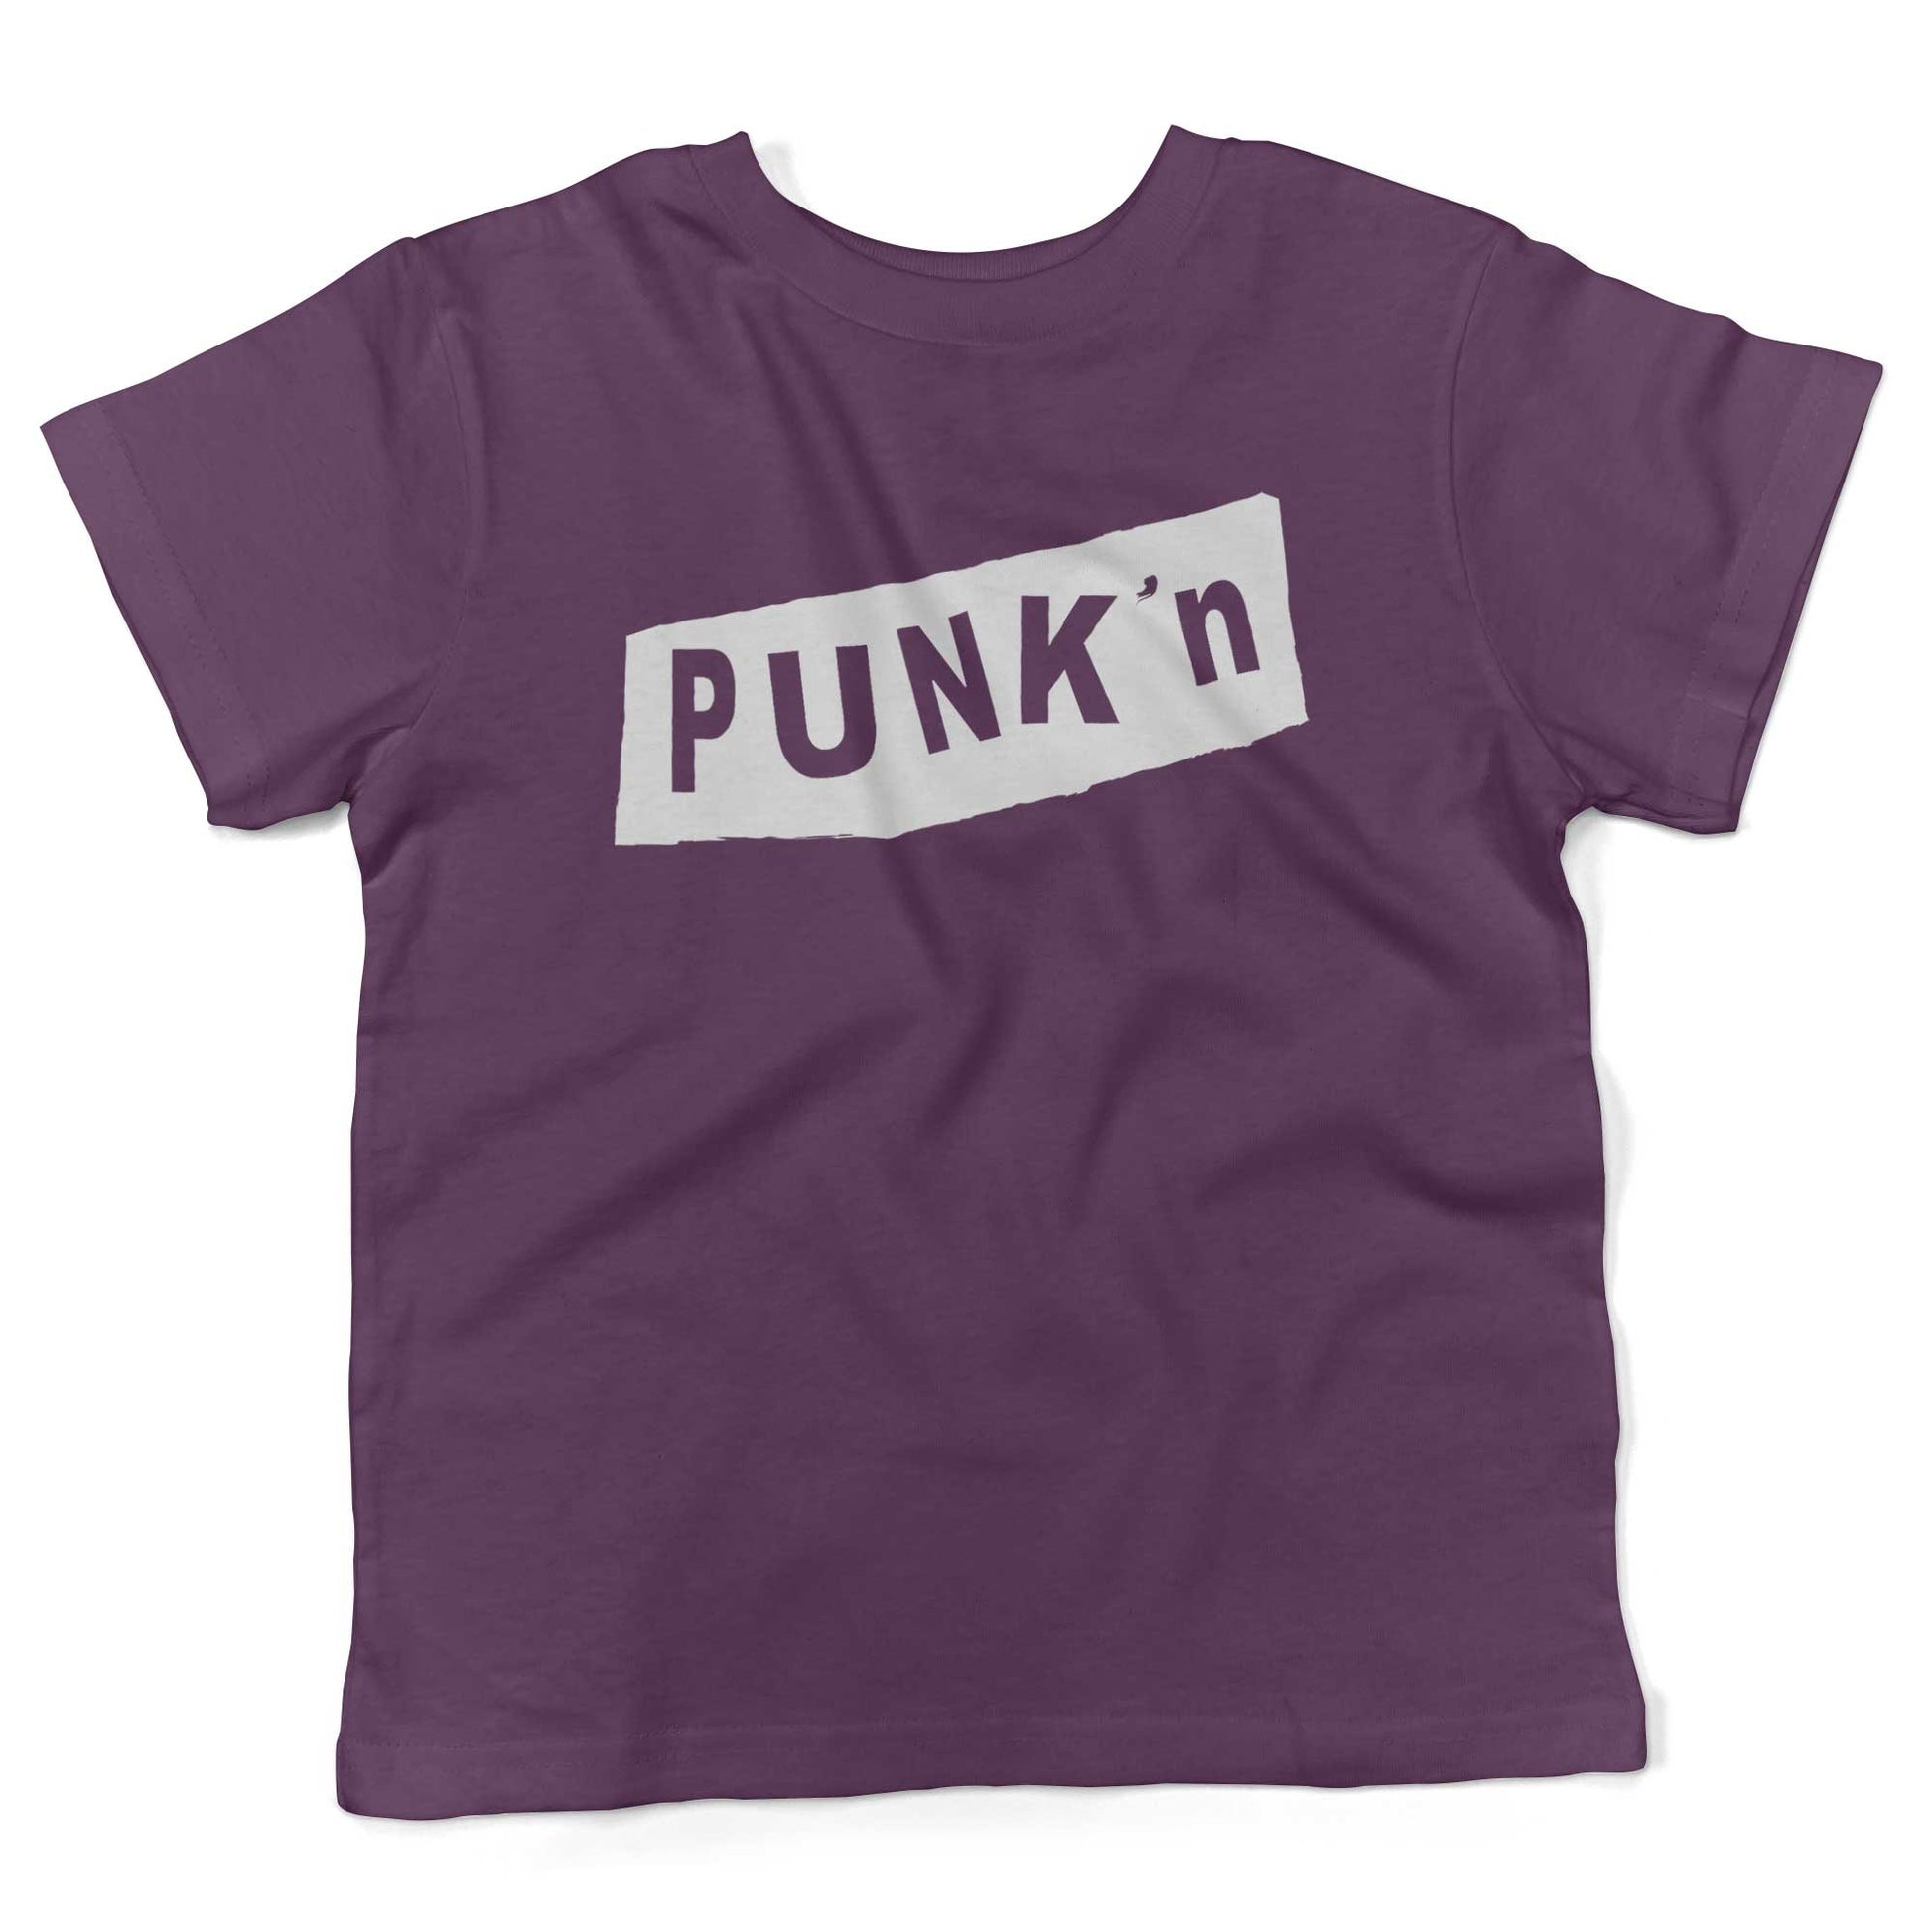 Pumpkin Punk'n Toddler Shirt-Organic Purple-2T